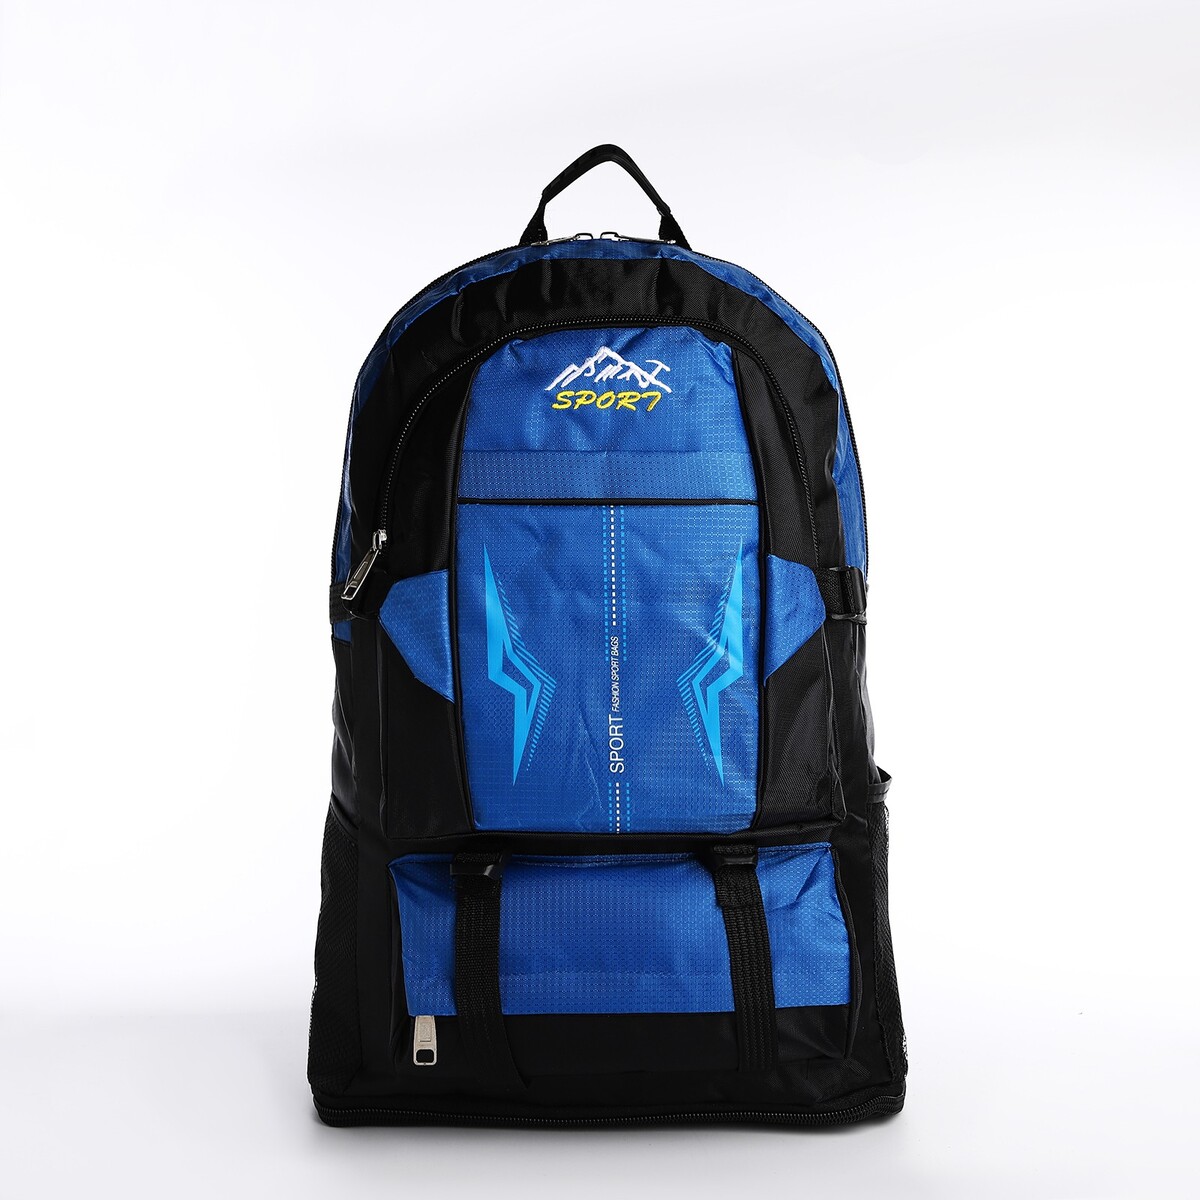 Рюкзак на молнии с увеличением, 65л, 4 наружных кармана, цвет синий рюкзак на молнии с usb 4 наружных кармана сумка пенал синий